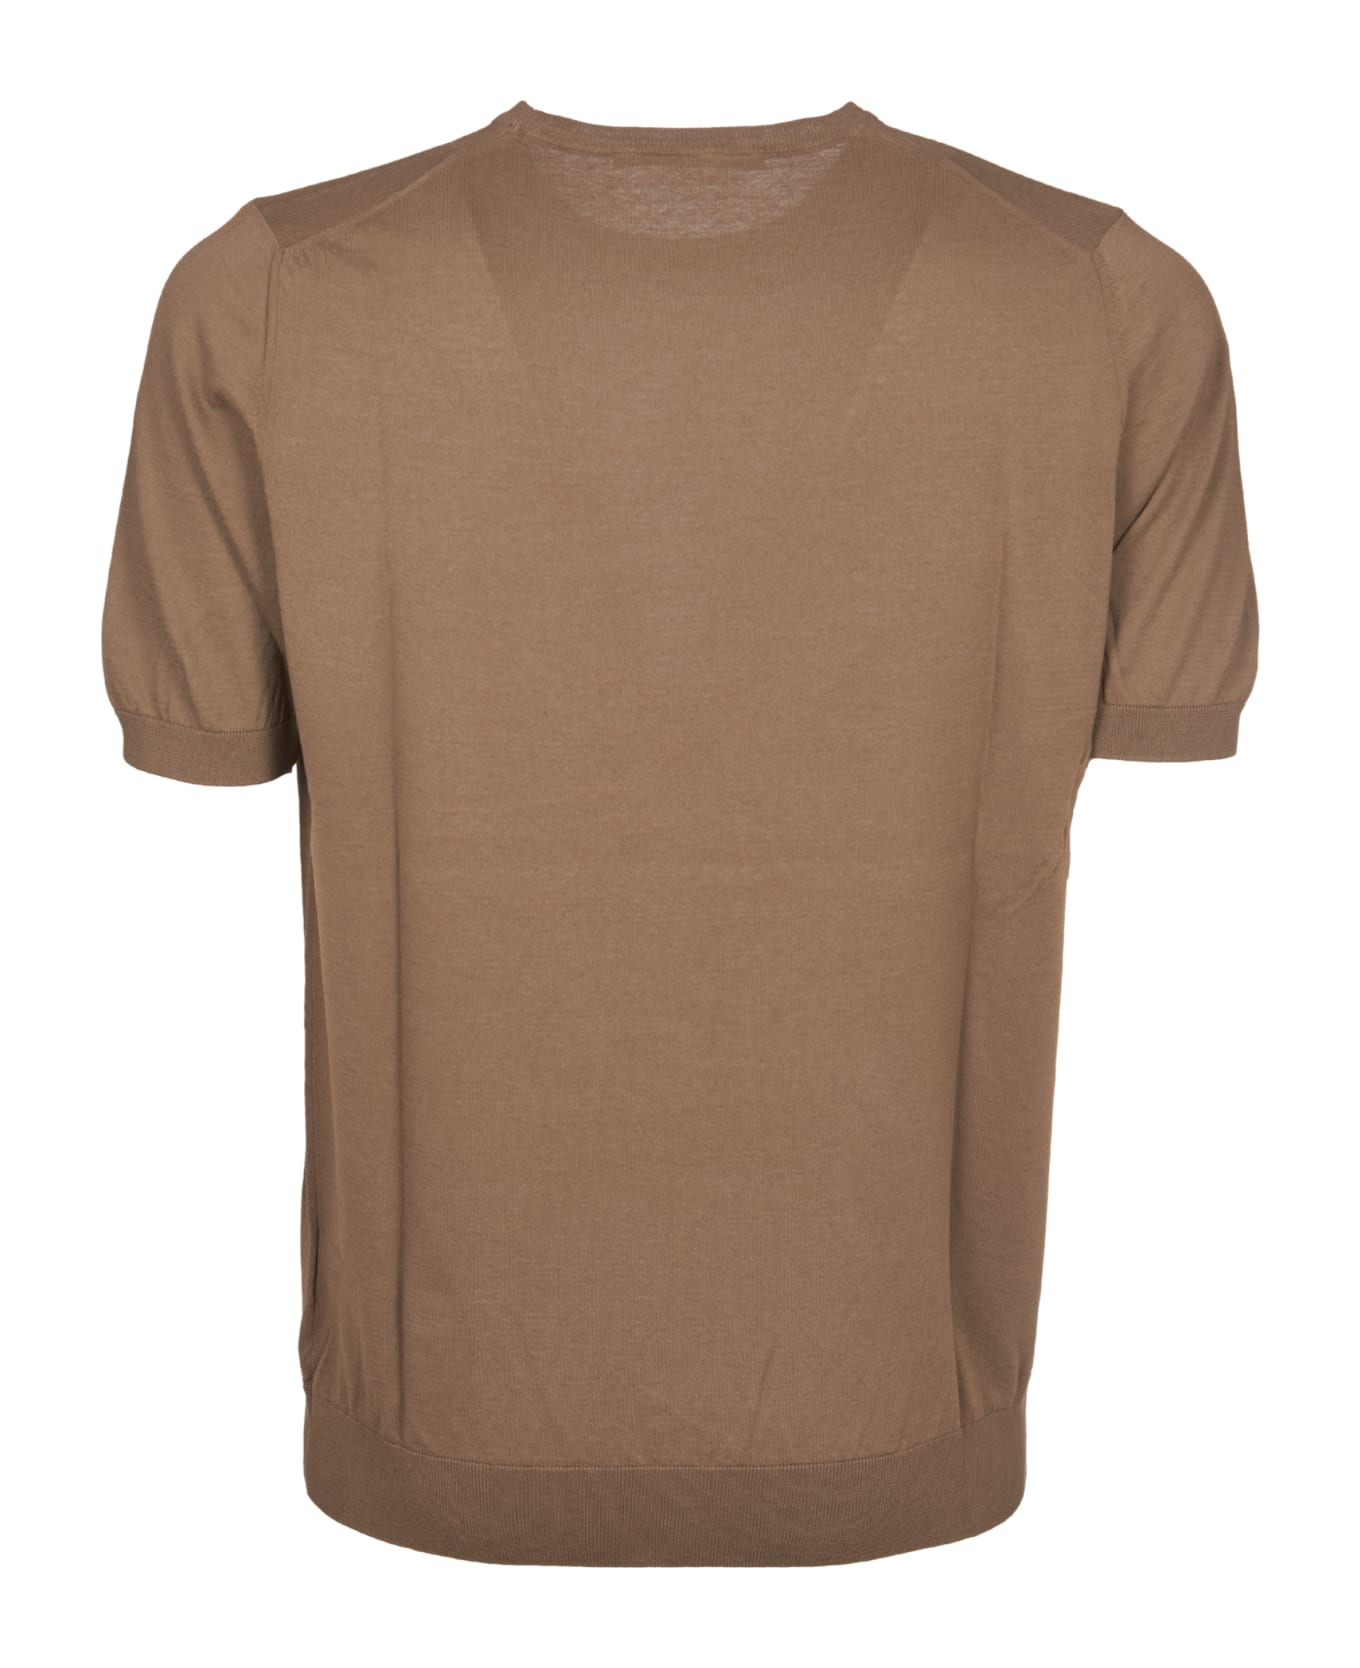 Tagliatore T-shirt - Brown